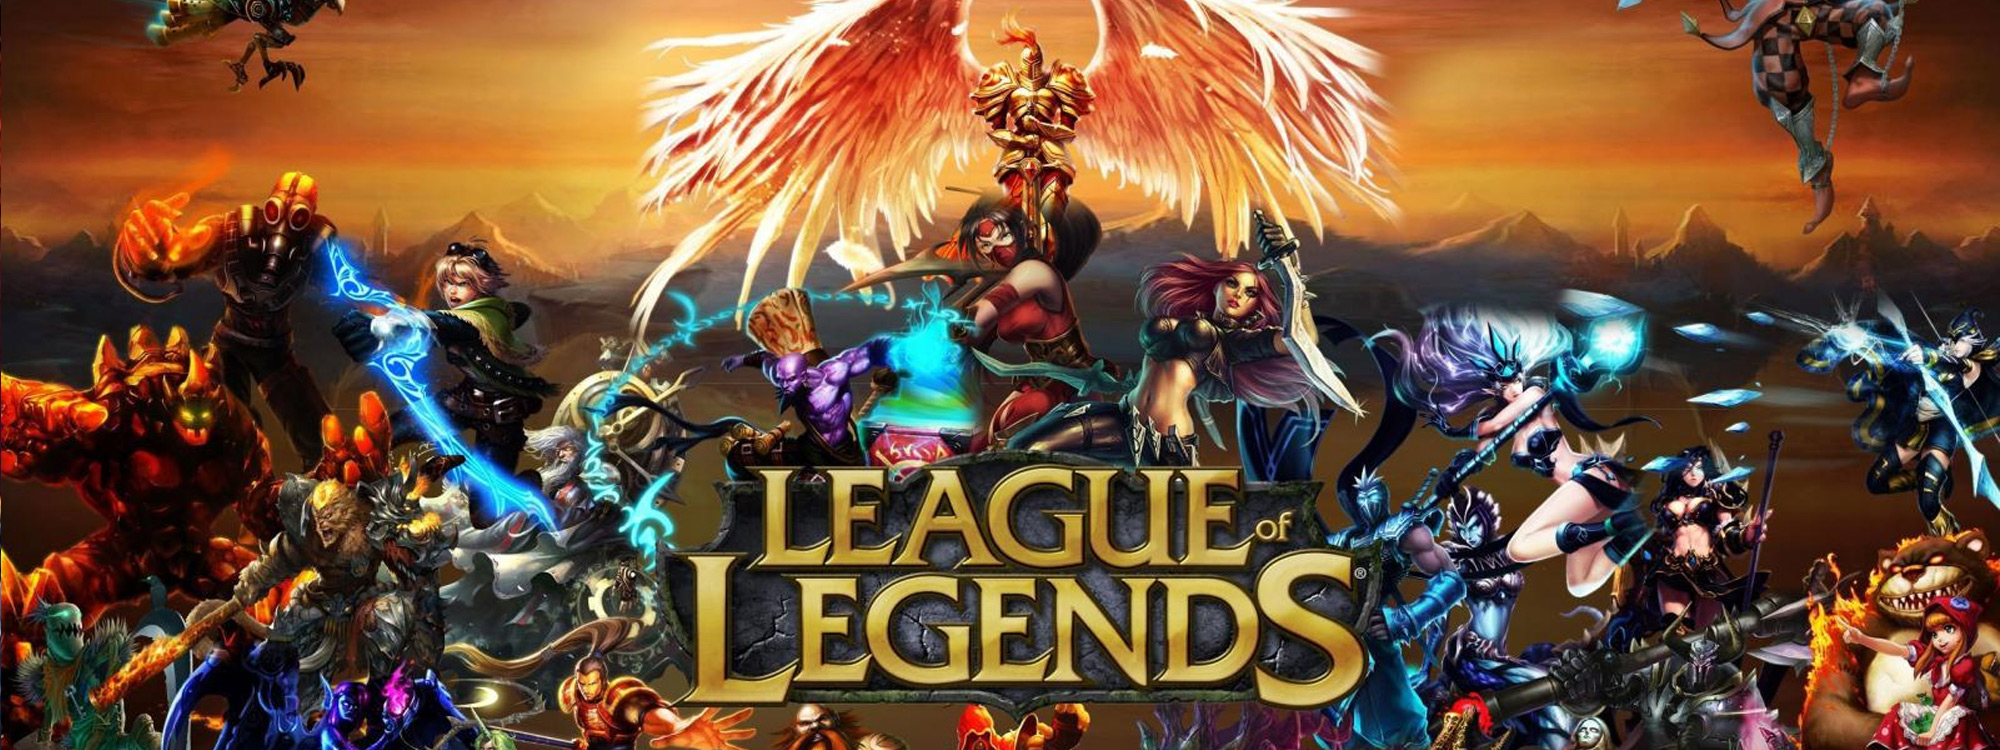 League of legends Game PC - Systeemeisen League of legends